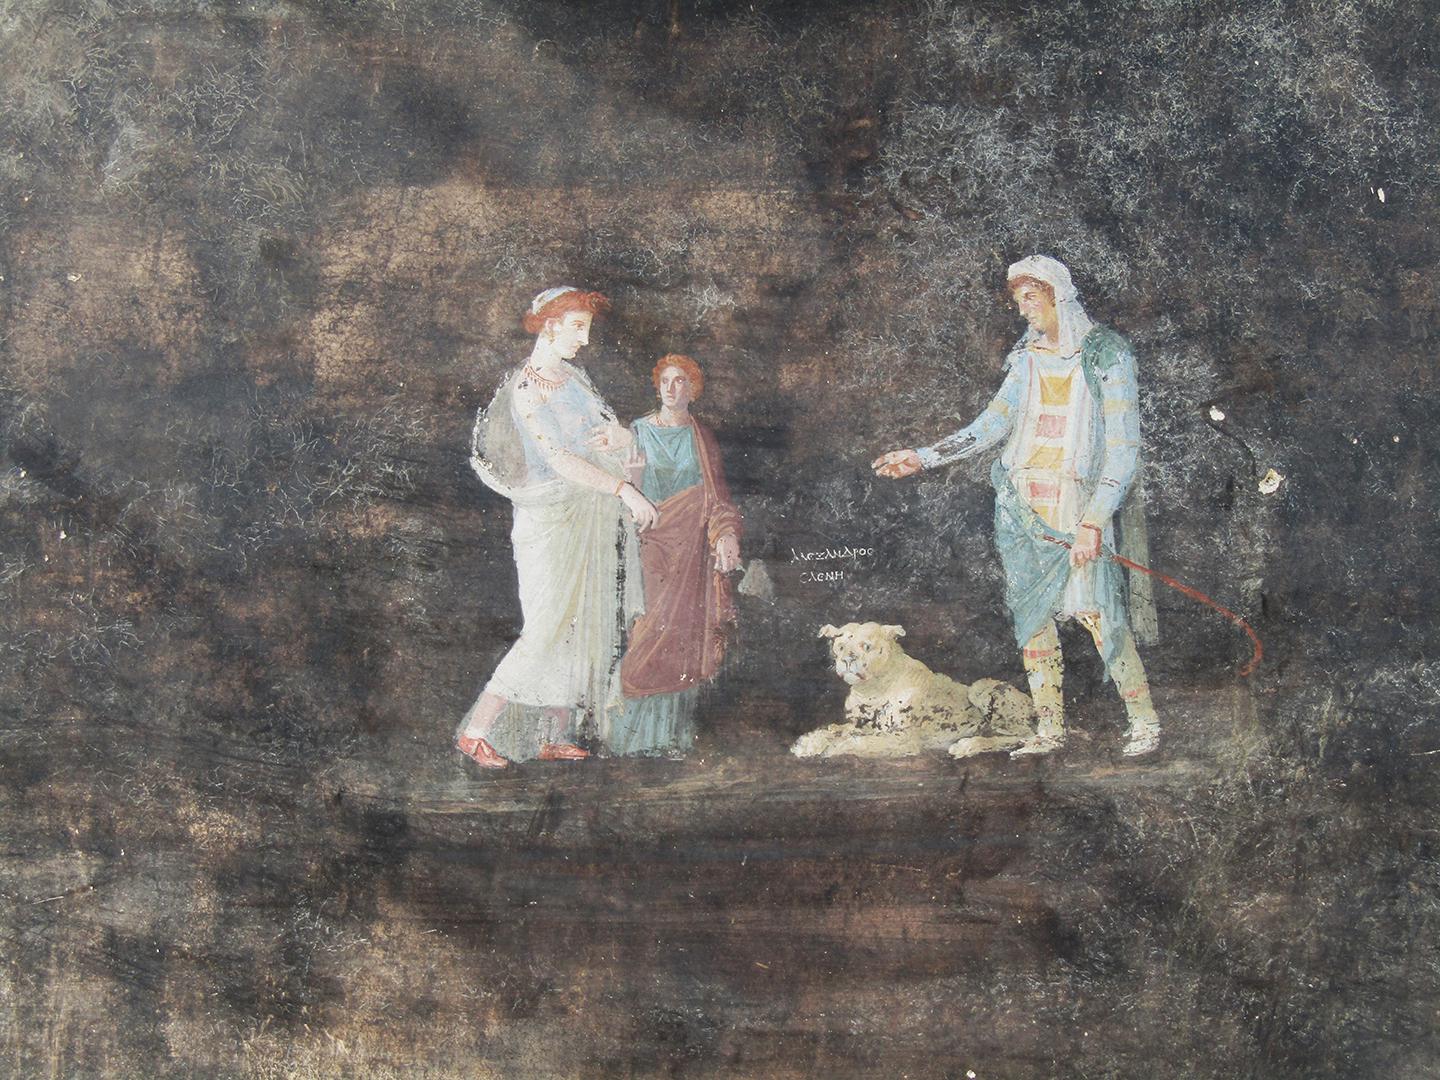 Fresco depicting the Trojan War discovered in Pompeii